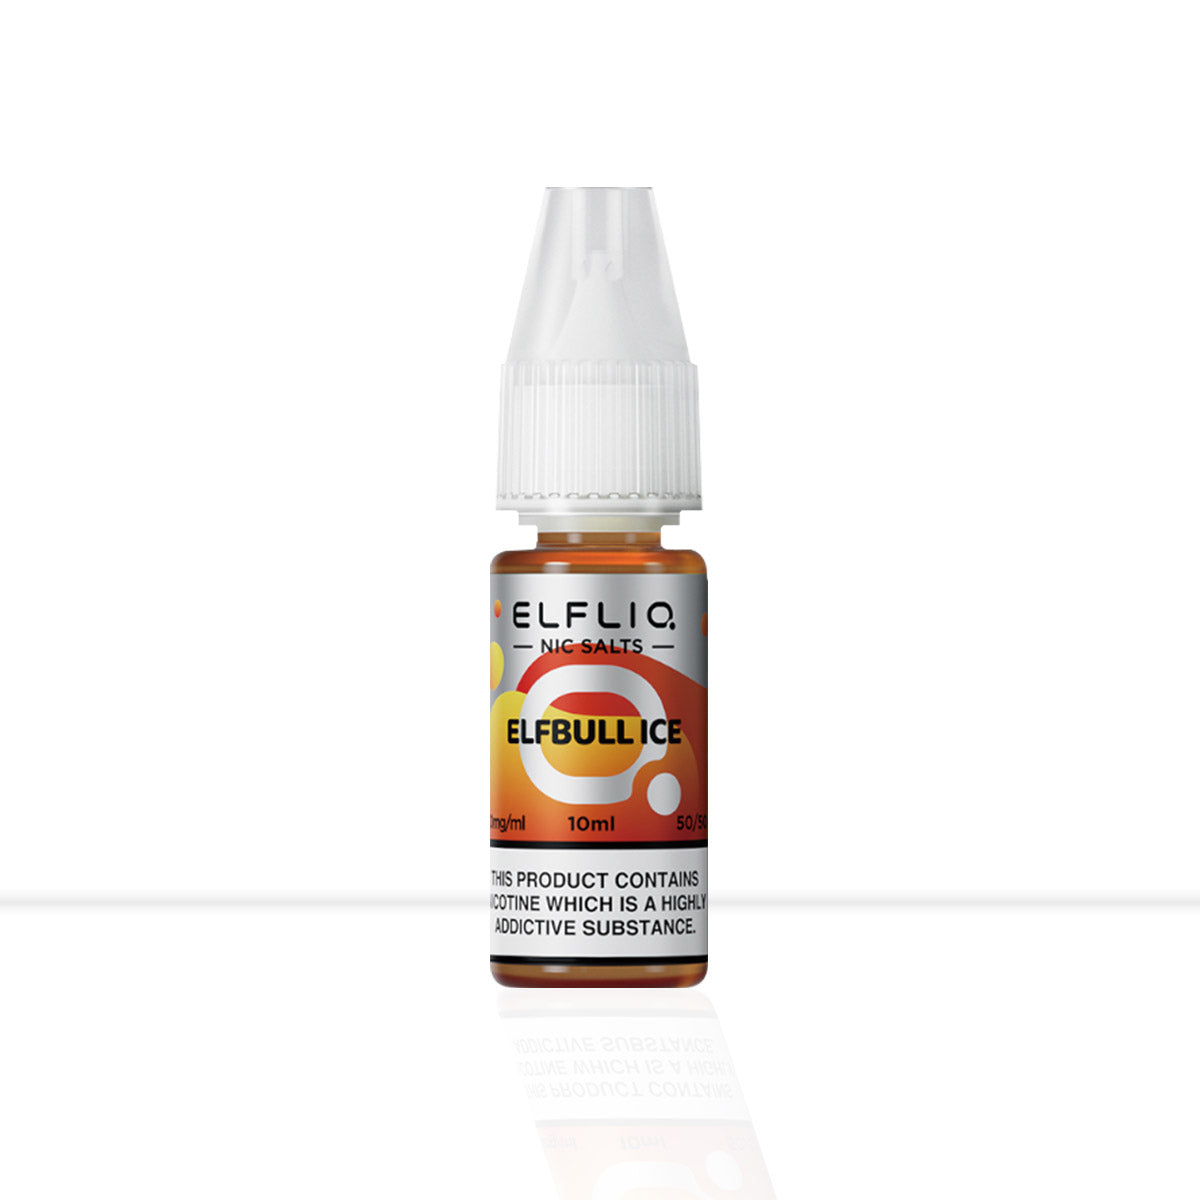 Elfbull Ice: Red and Orange Elfliq Nic Salt E-Liquid